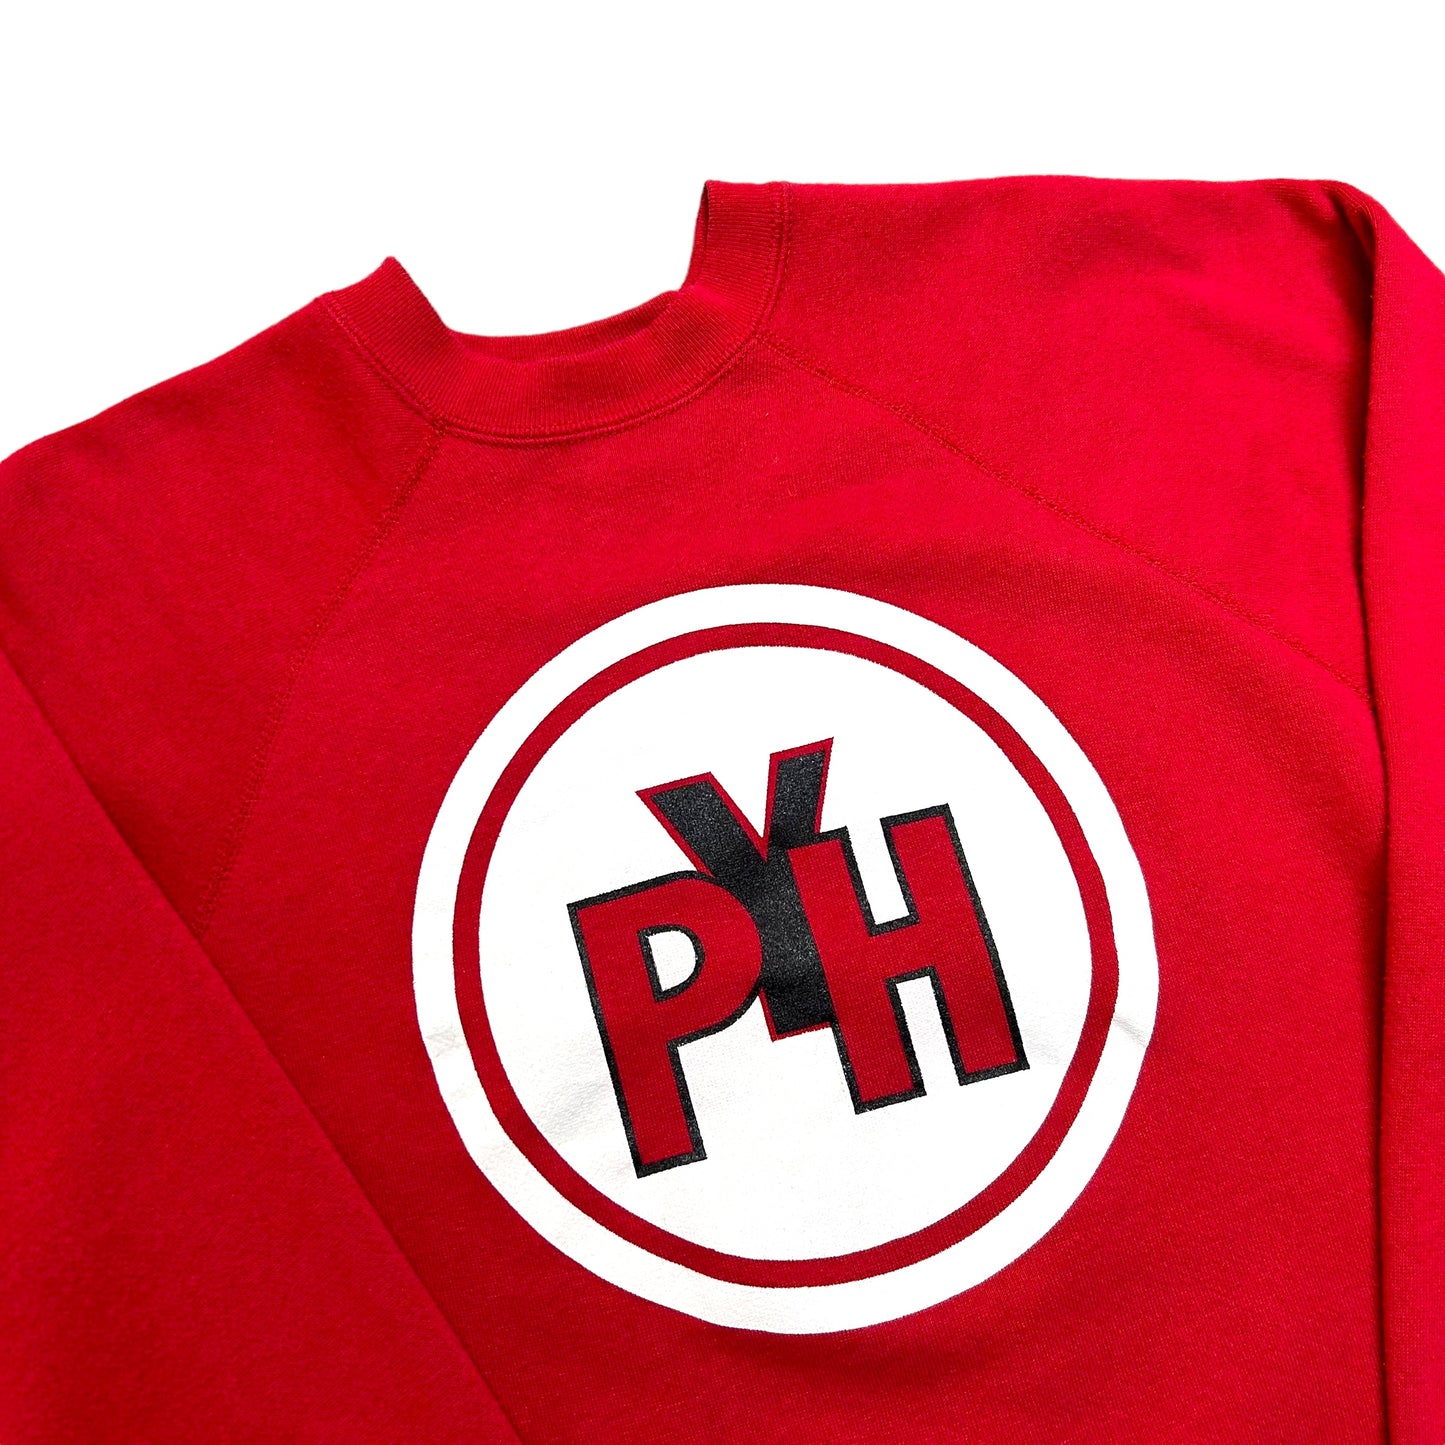 Vintage 1990s Plattsburgh Youth Hockey Red Crewneck Sweatshirt - Size Large